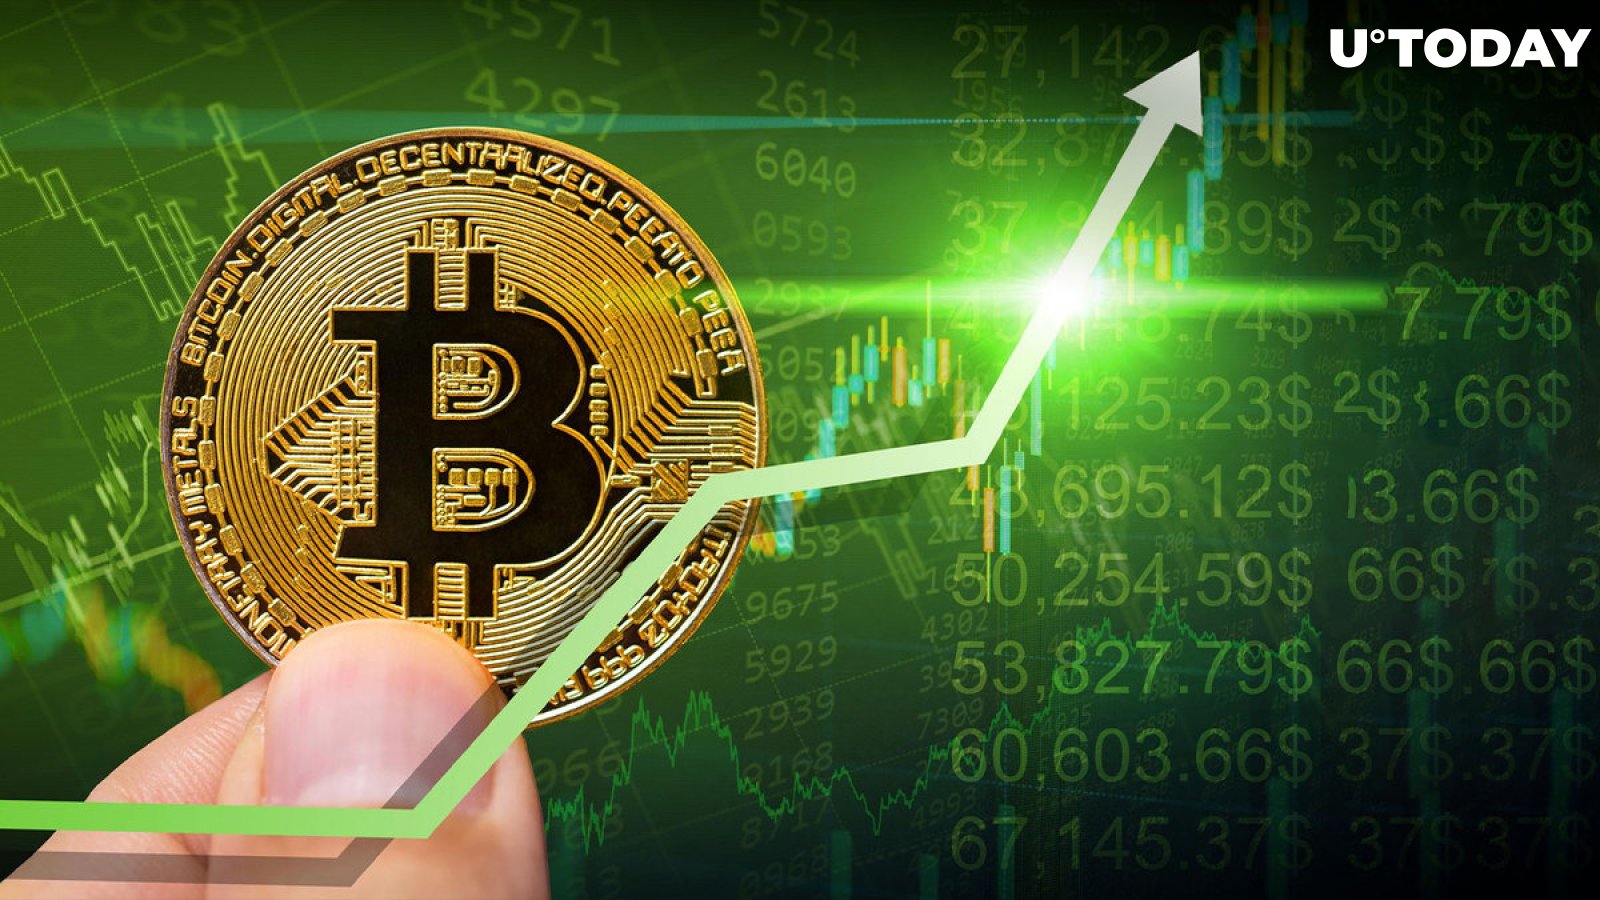 Bitcoin (BTC) Obliterates Stock Market in Performance